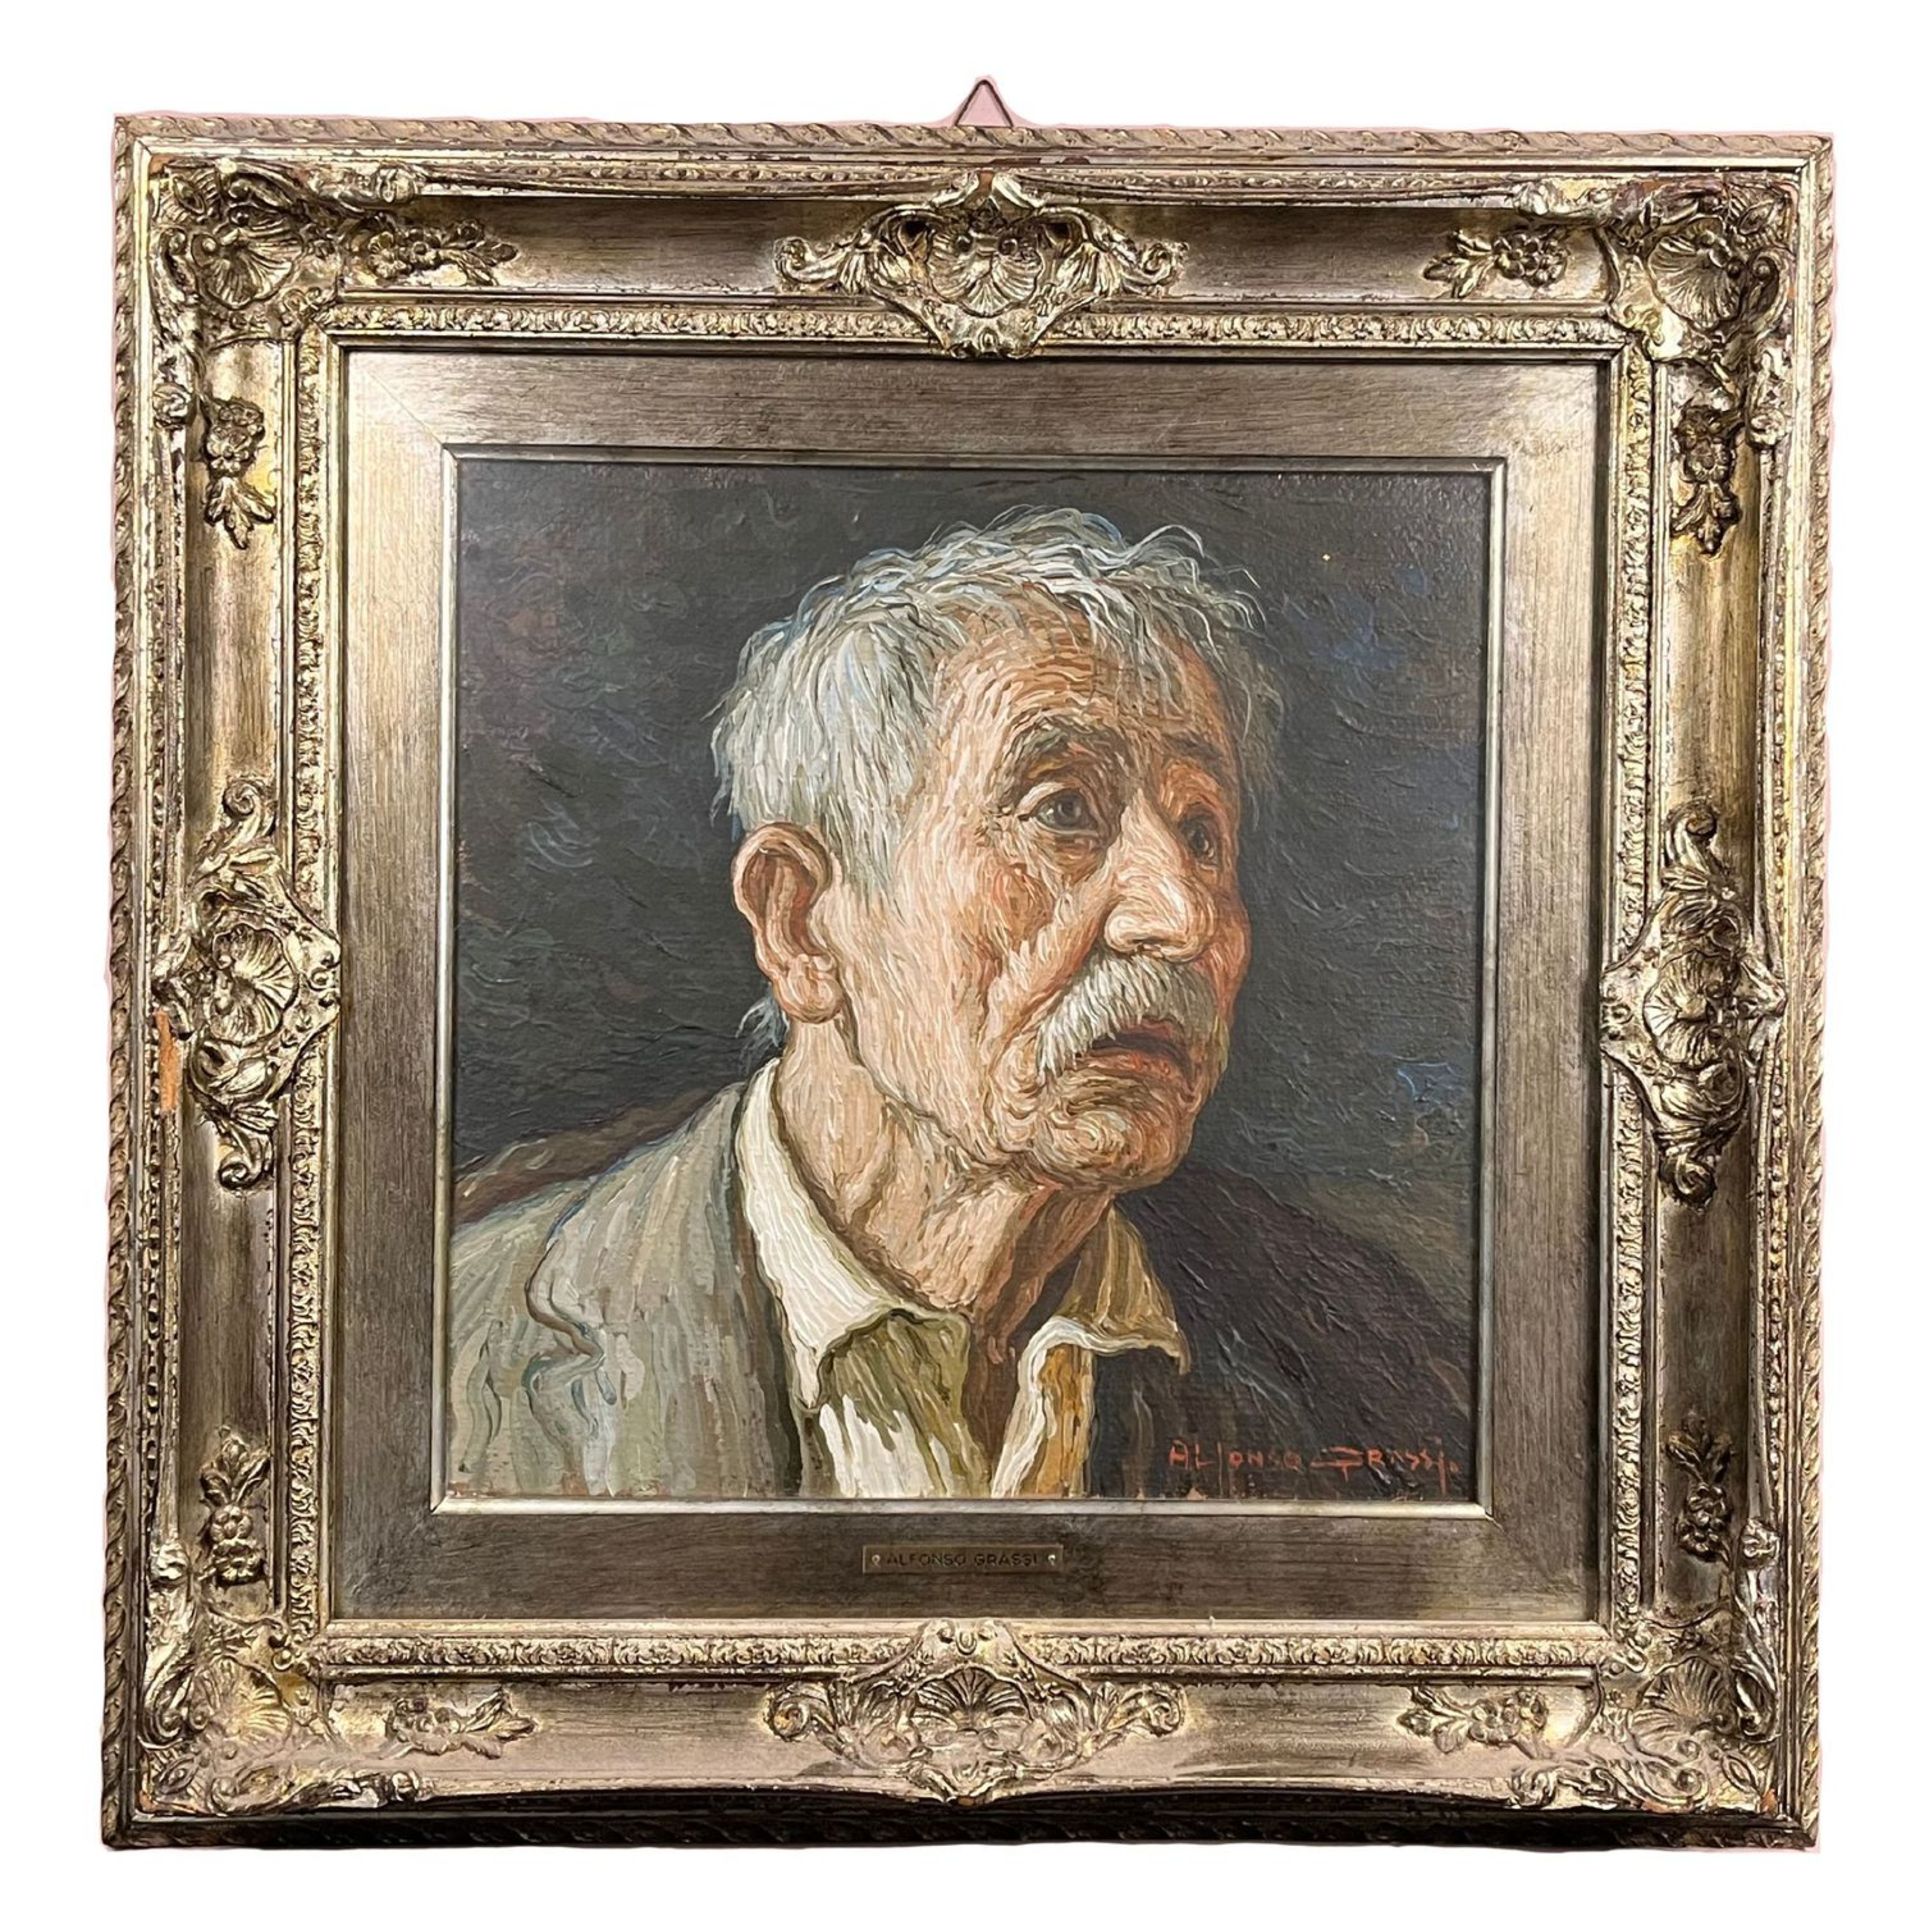 A. Grassi (1918 - 2002) - Portrait of an elderly person